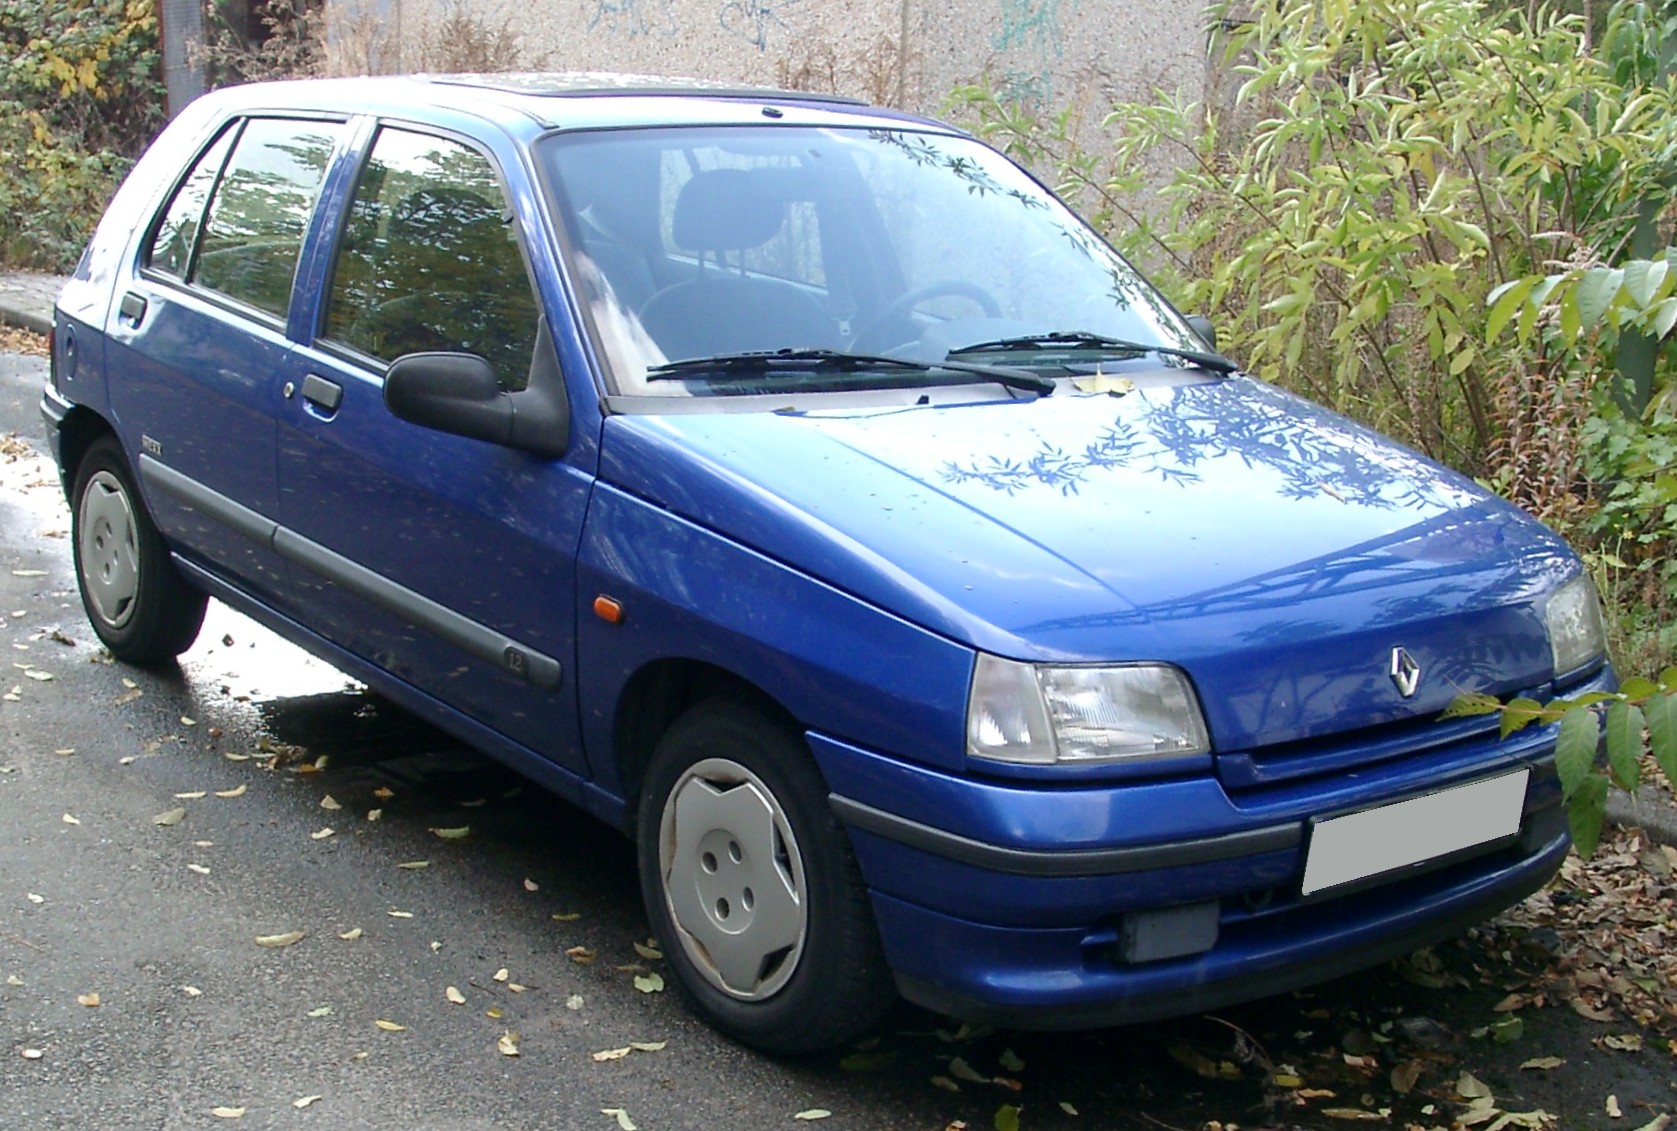 Renault_Clio_front_20071030.jpg